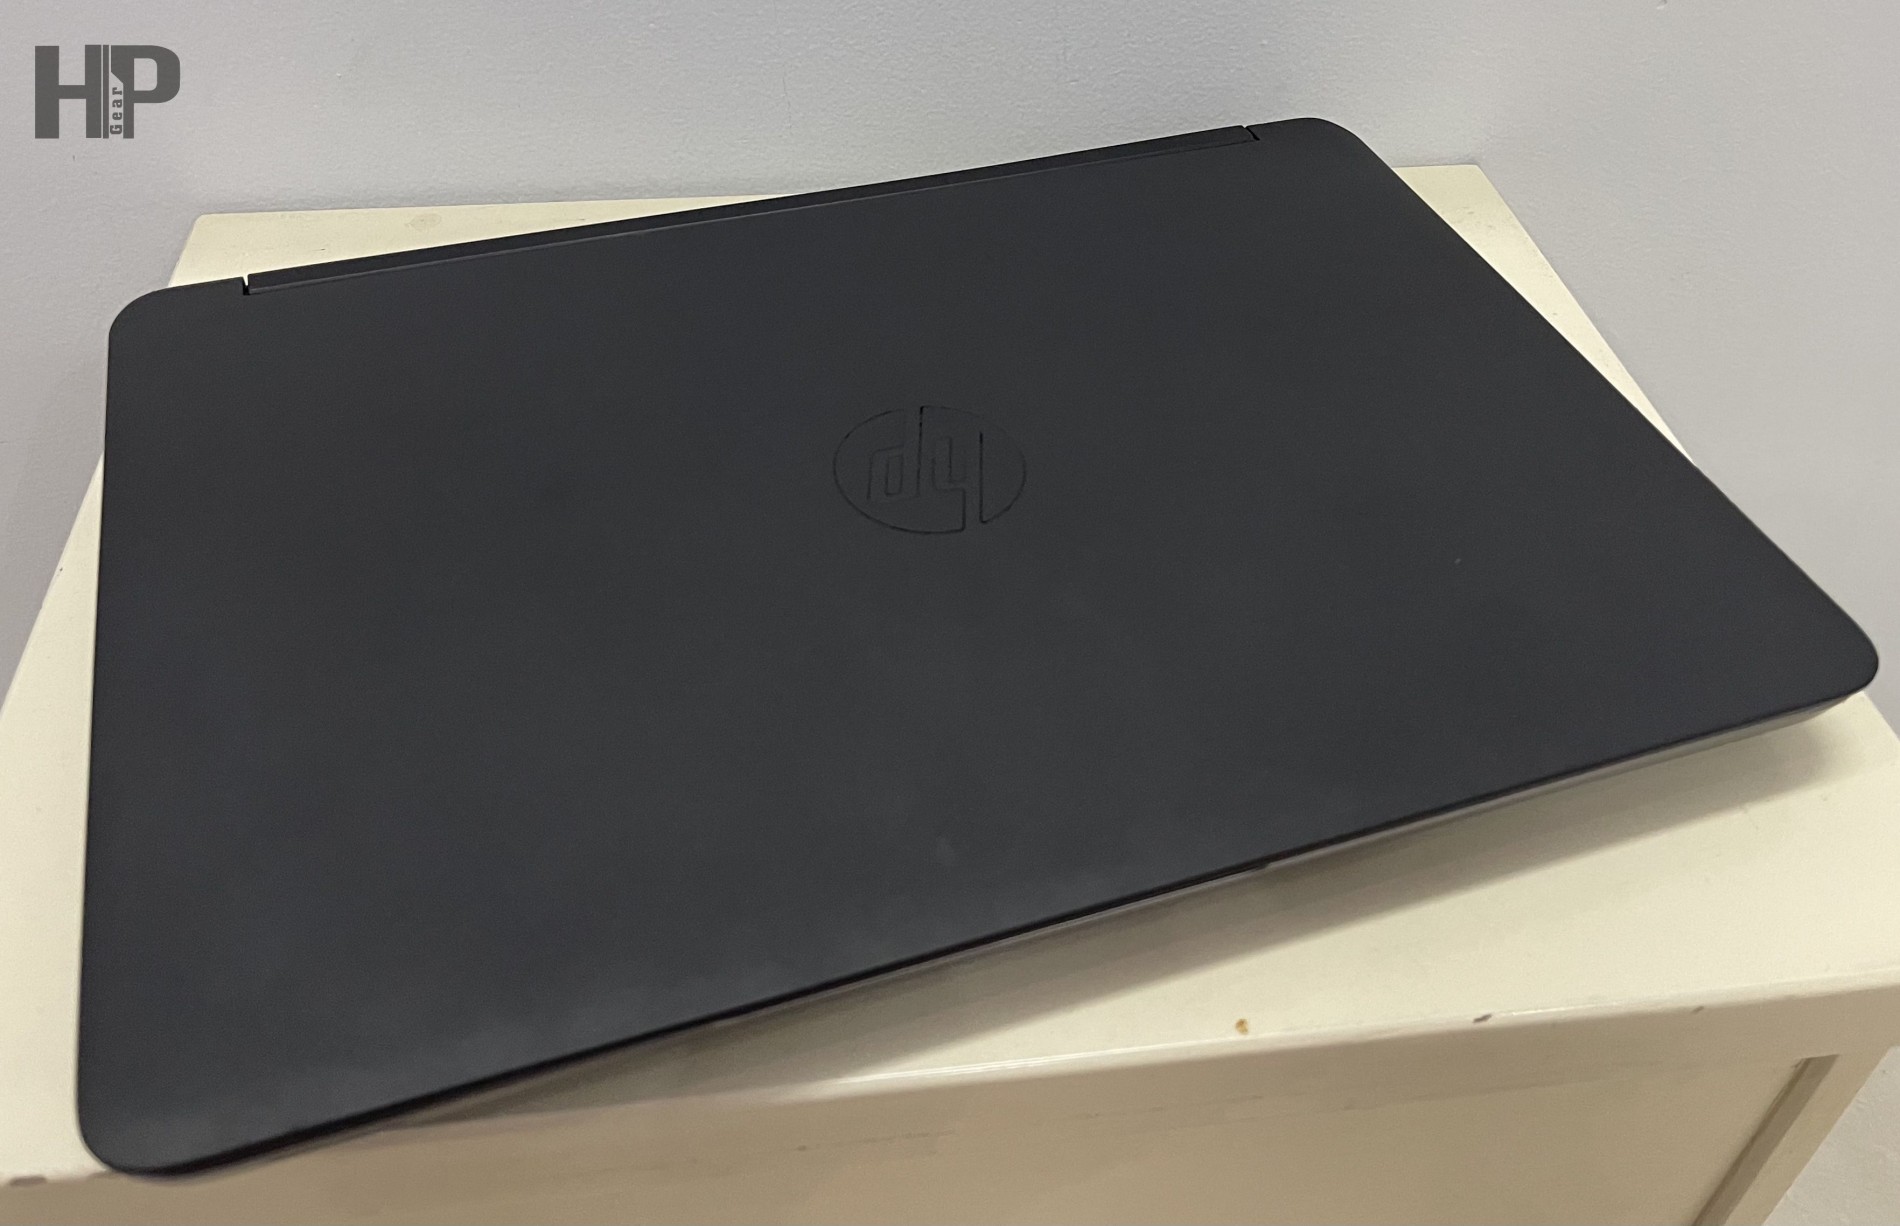 Laptop HP 640 G1 - i5 4300M (like new 98%)